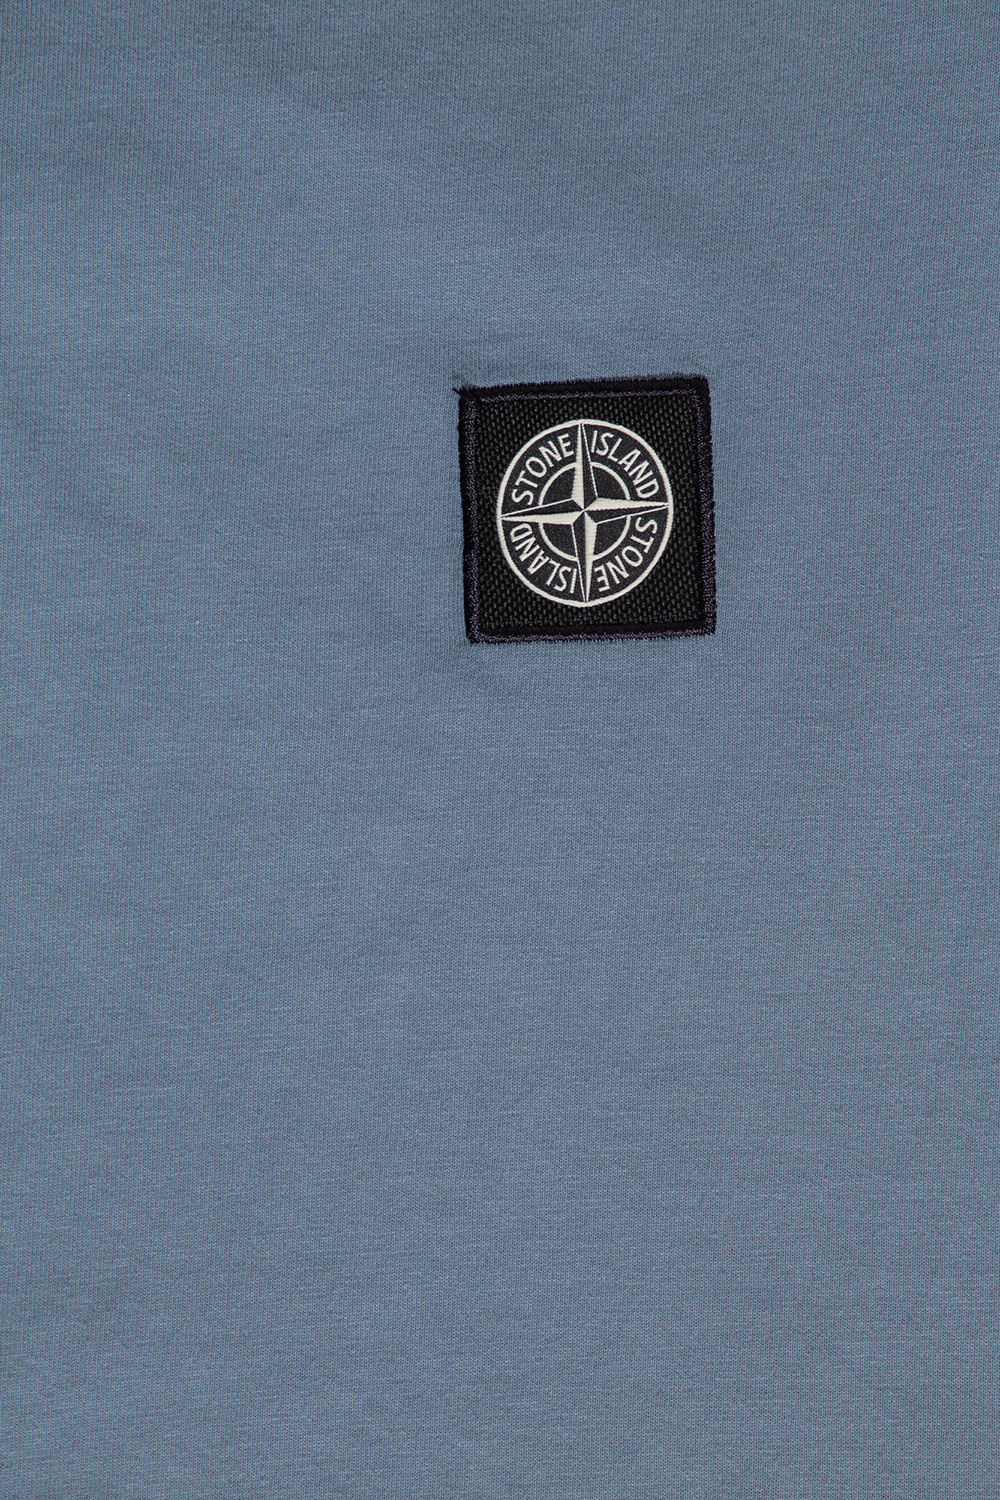 Moncler zois Puffer Jacket ader error embroidered logo t shirt item